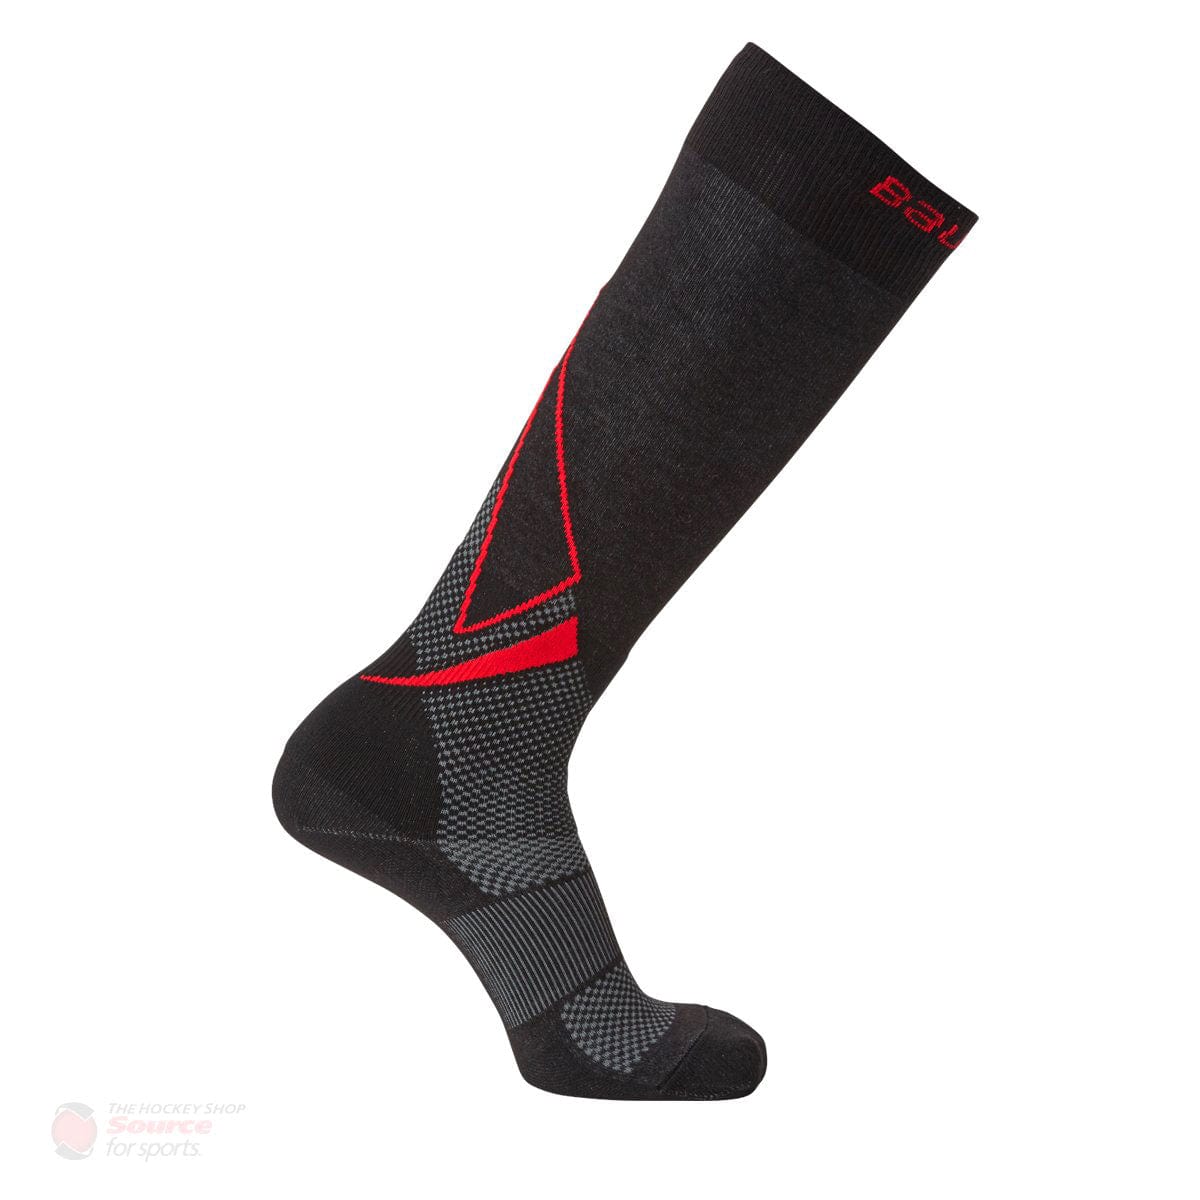 Bauer Pro Skate Socks - Tall